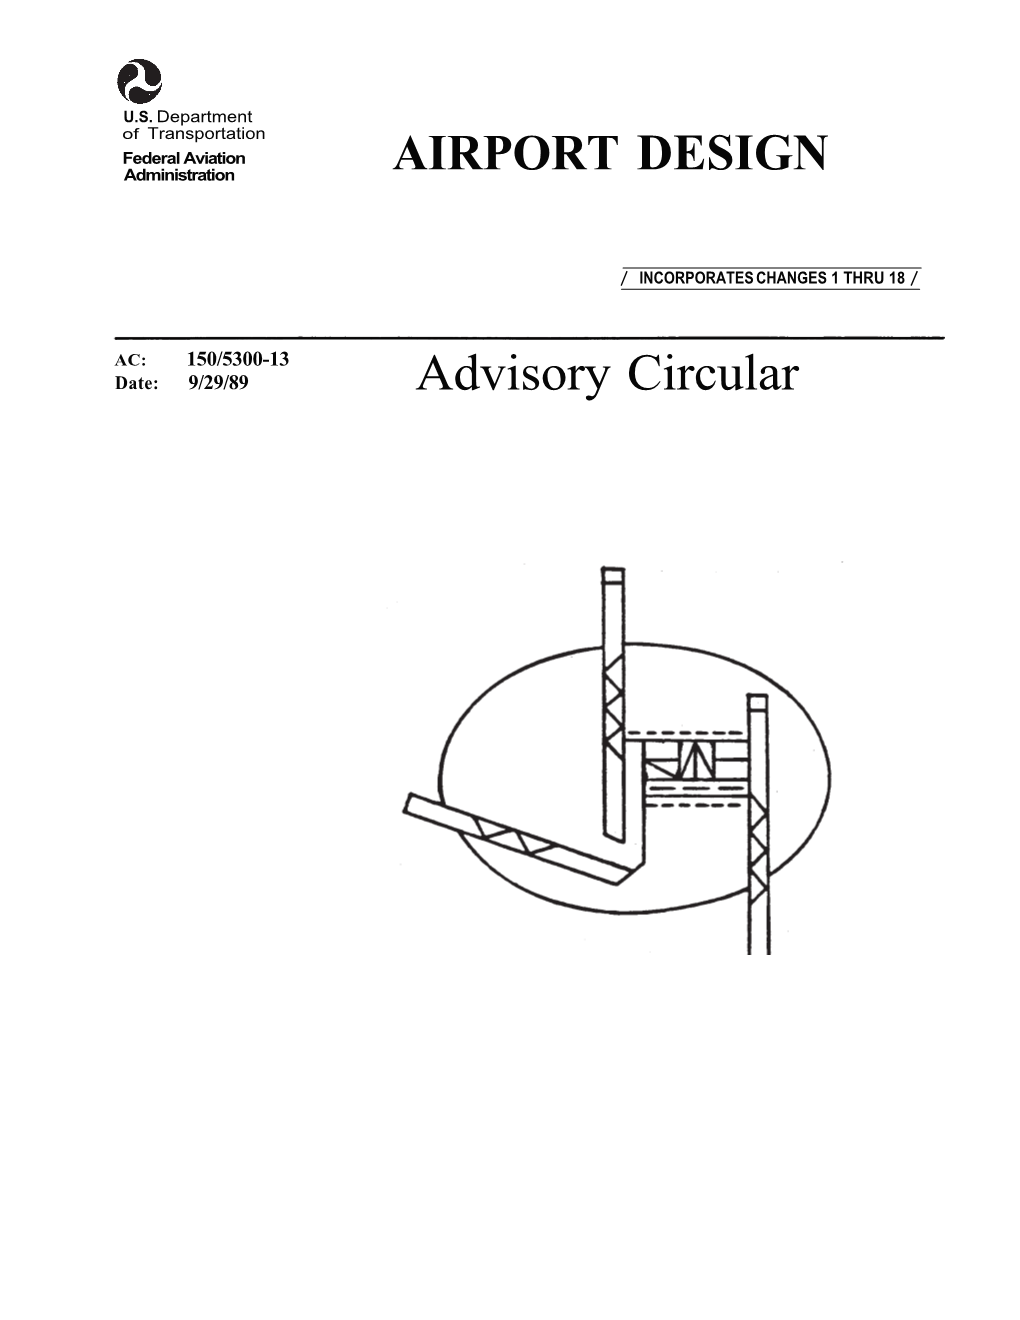 Advisory Circular 150/5300-13, Airport Design